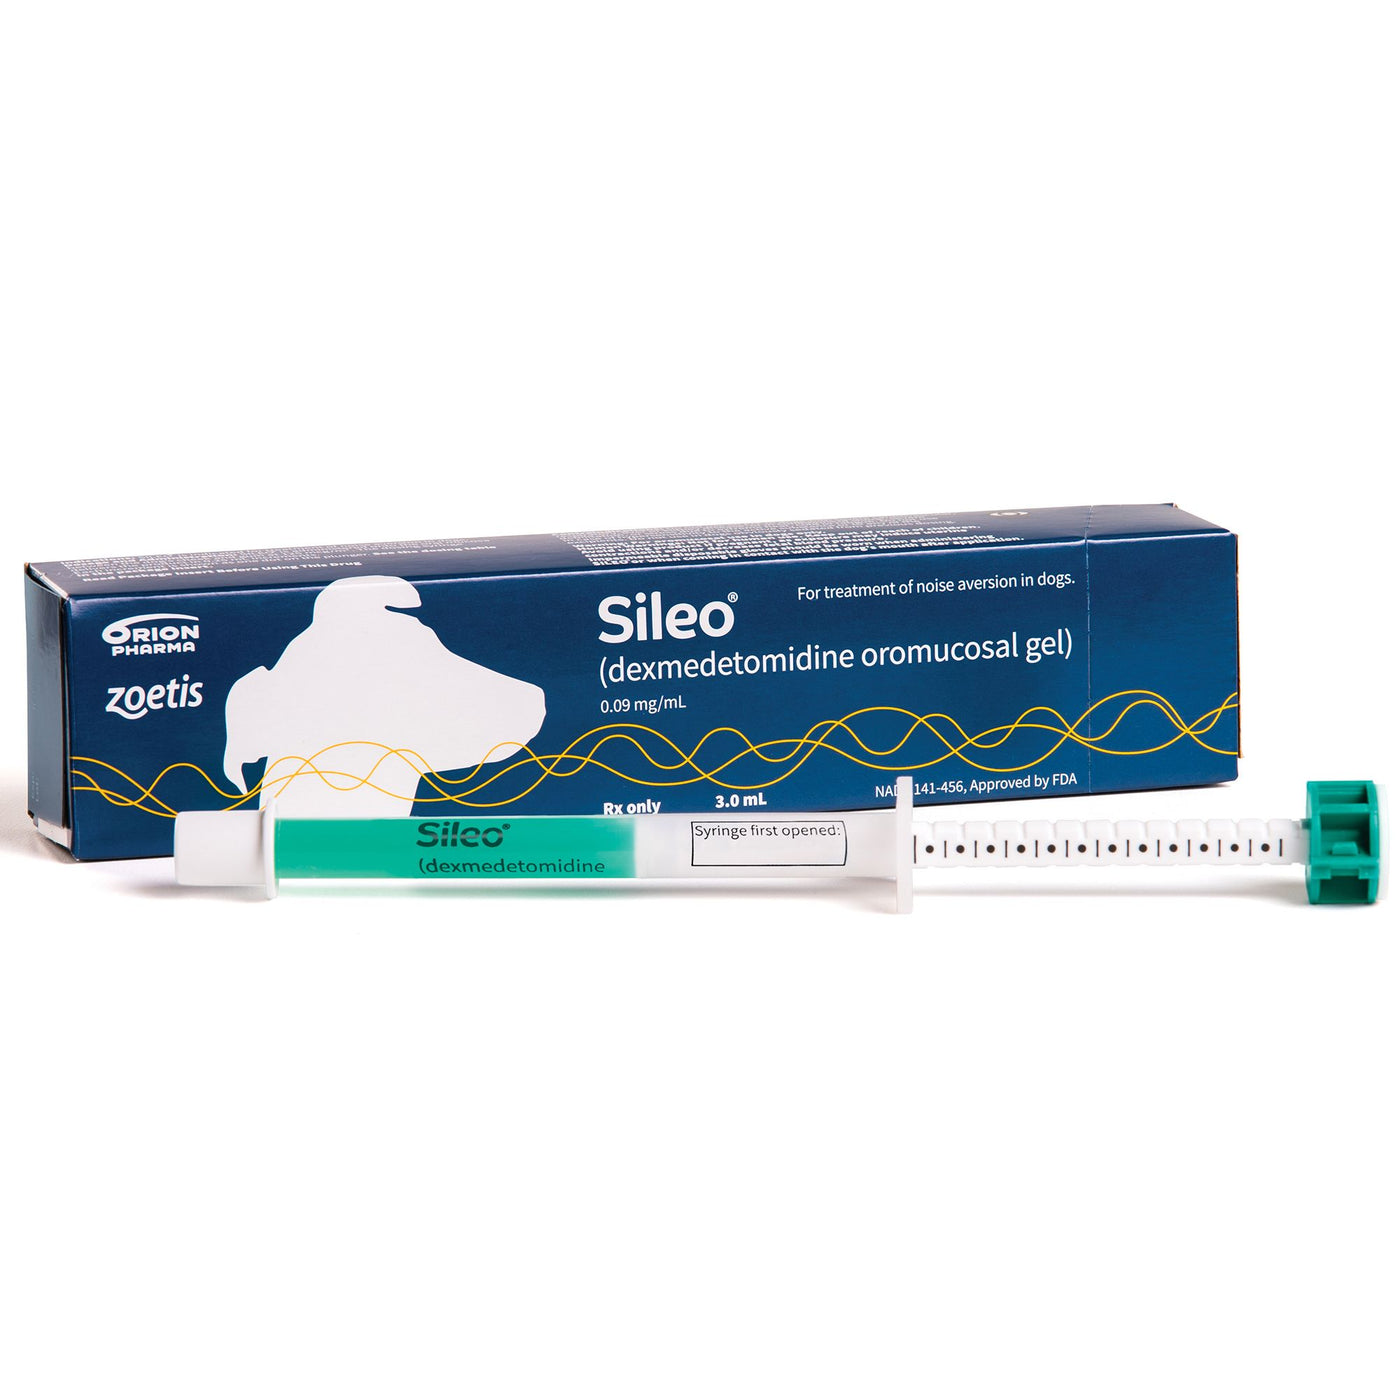 Sileo 0.1mg/ml Oromucosal Gel for Dogs - 3ml Syringe